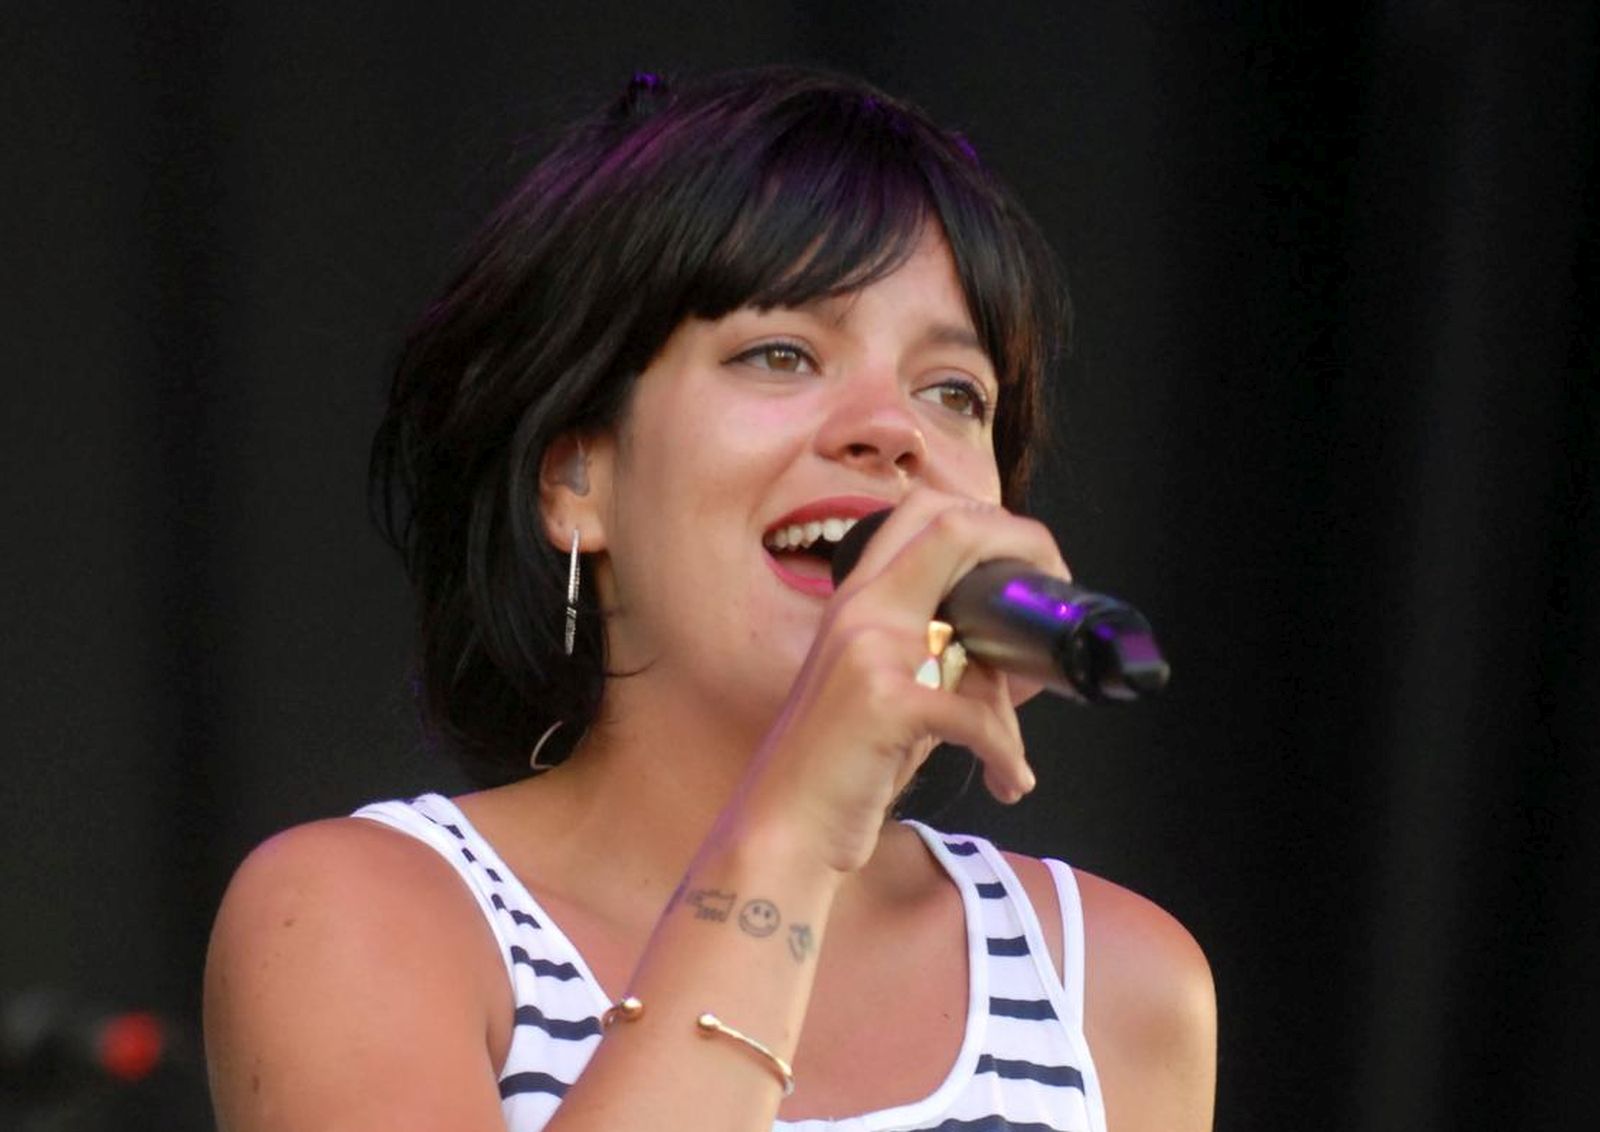 24.06.2009., Zagreb - Lily Allen je nastupila na T-Mobile INmusic festivalu na Jarunu. rPhoto: Matija Habljak/Vecernji list